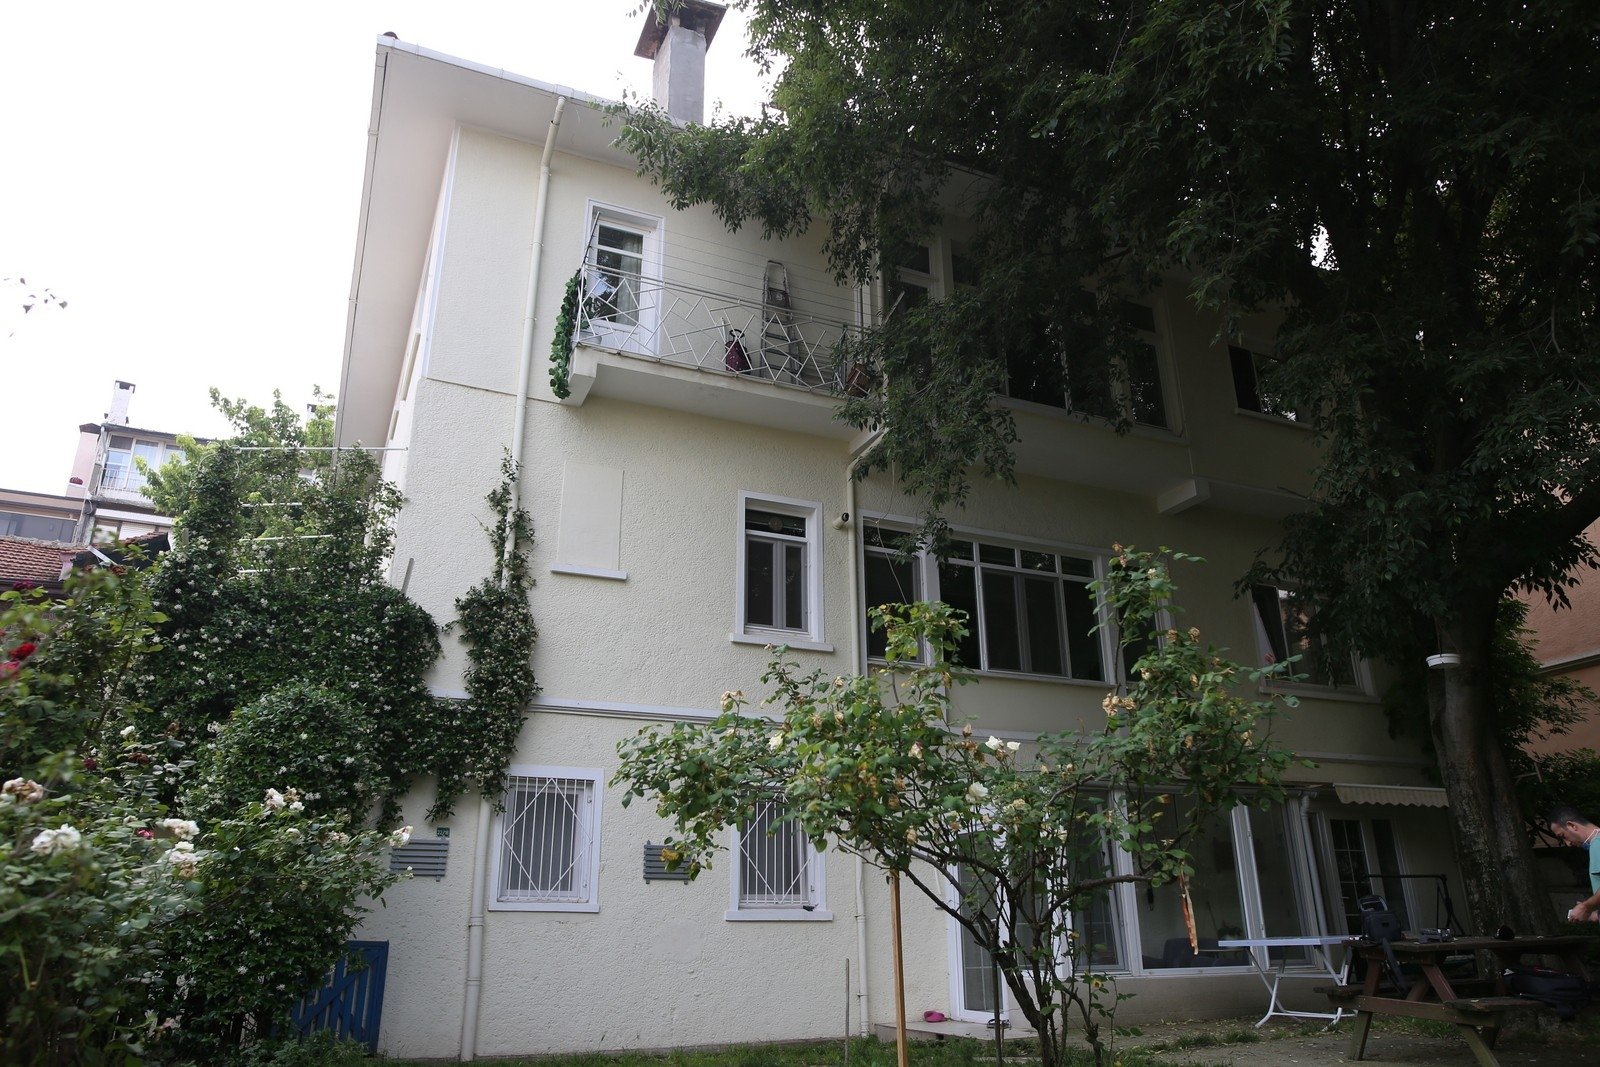 The exterior of the house where Ruhollah Khomeini stayed, in Bursa, northwestern Turkey, June 10, 2021. (İHA PHOTO)